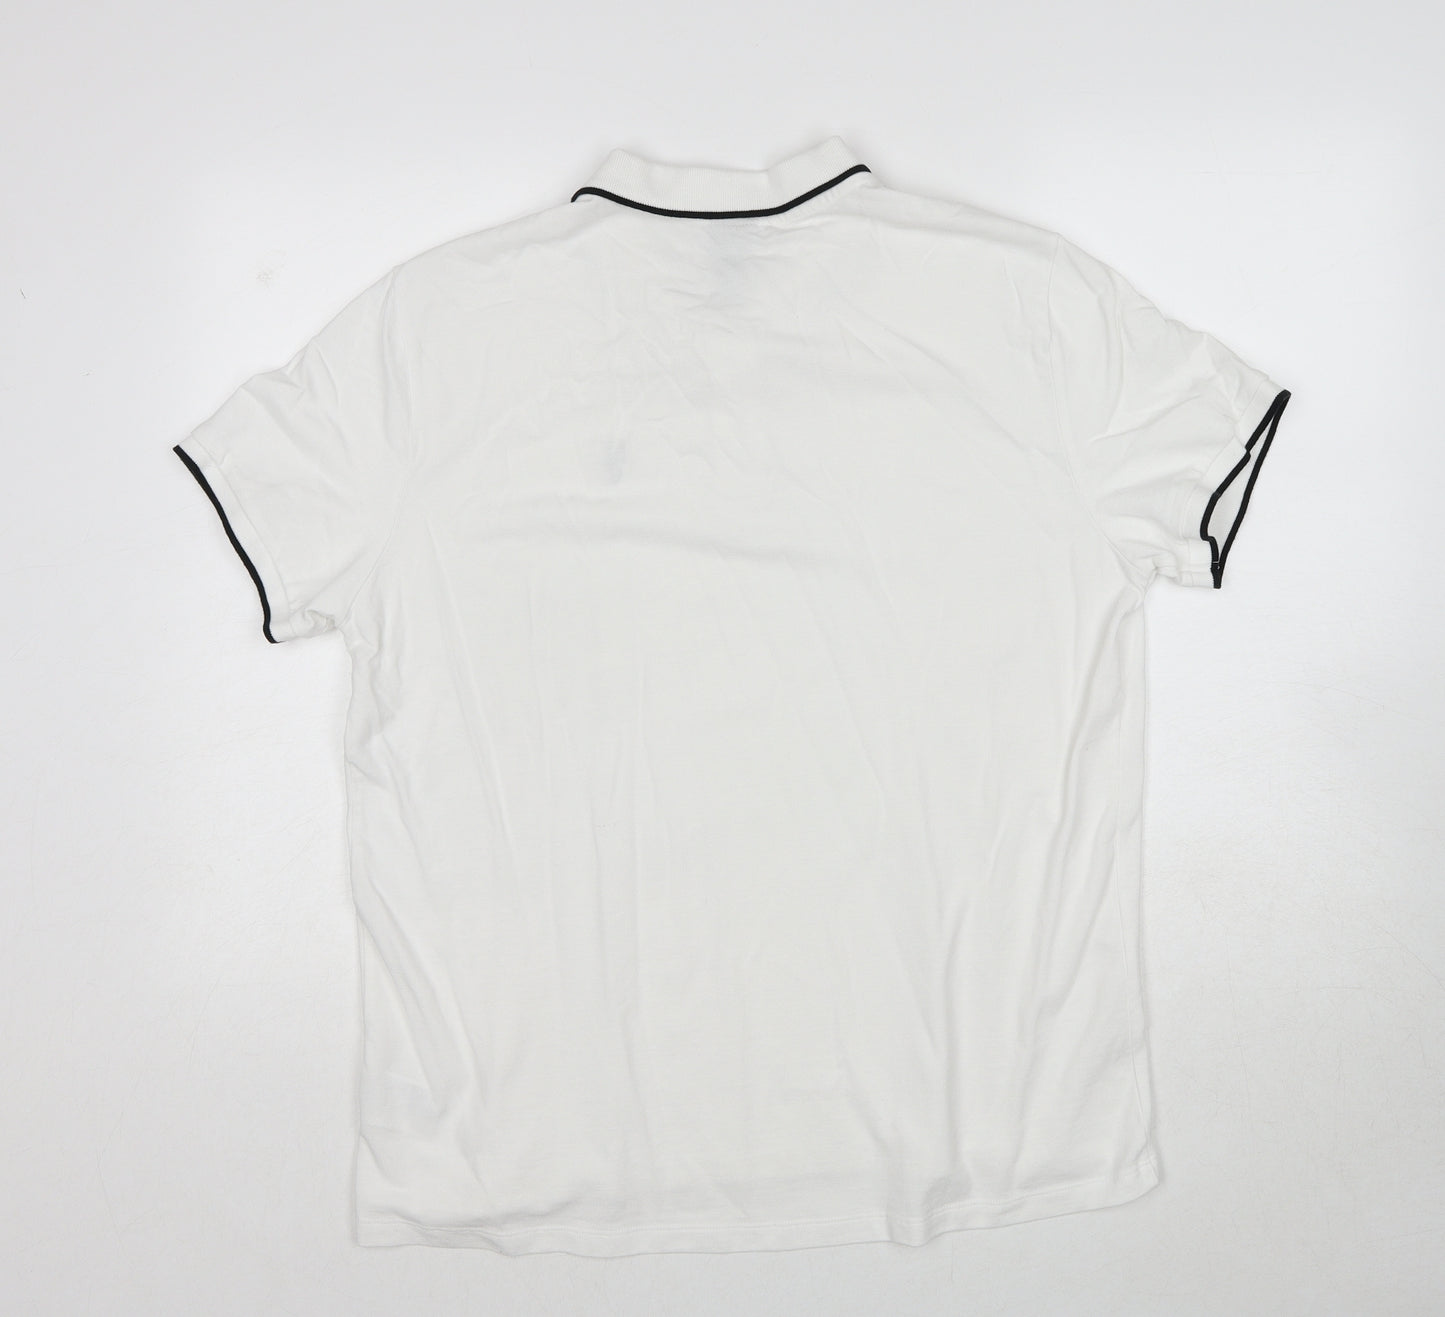 H&M Mens White Cotton Polo Size XL Collared Pullover